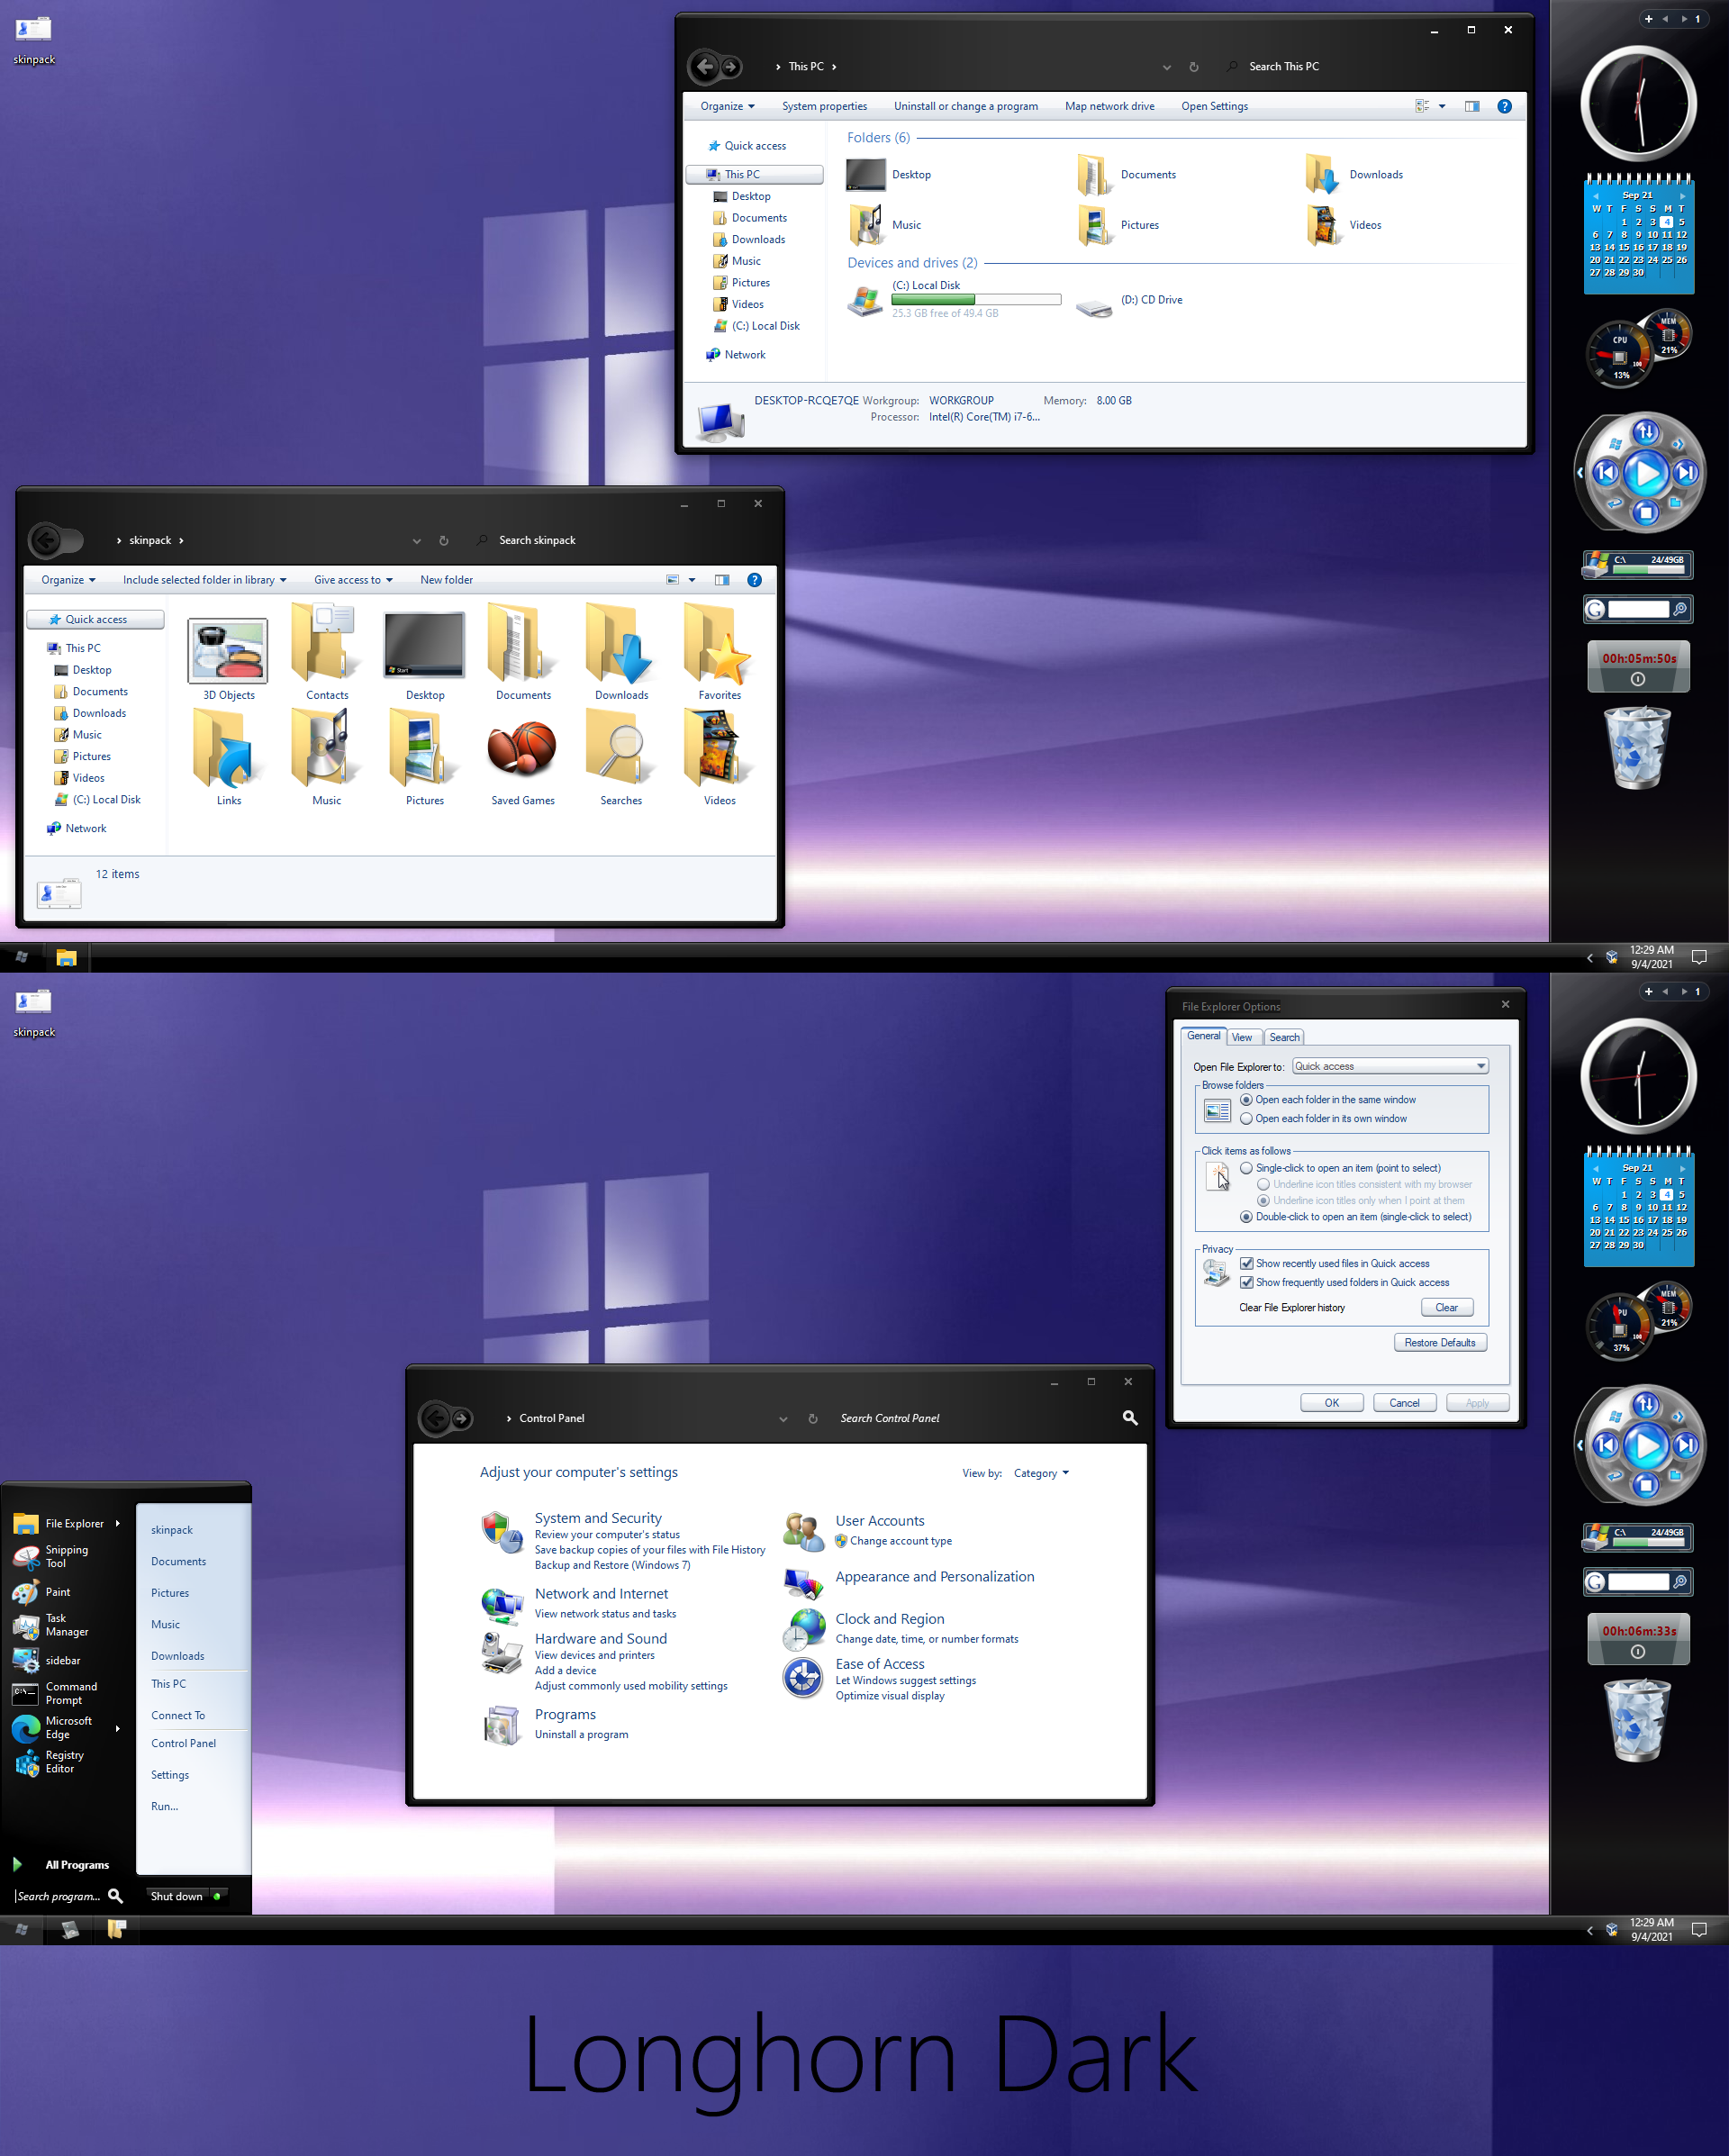 Longhorn Modern Dark Theme For Windows 10 By Protheme On Deviantart